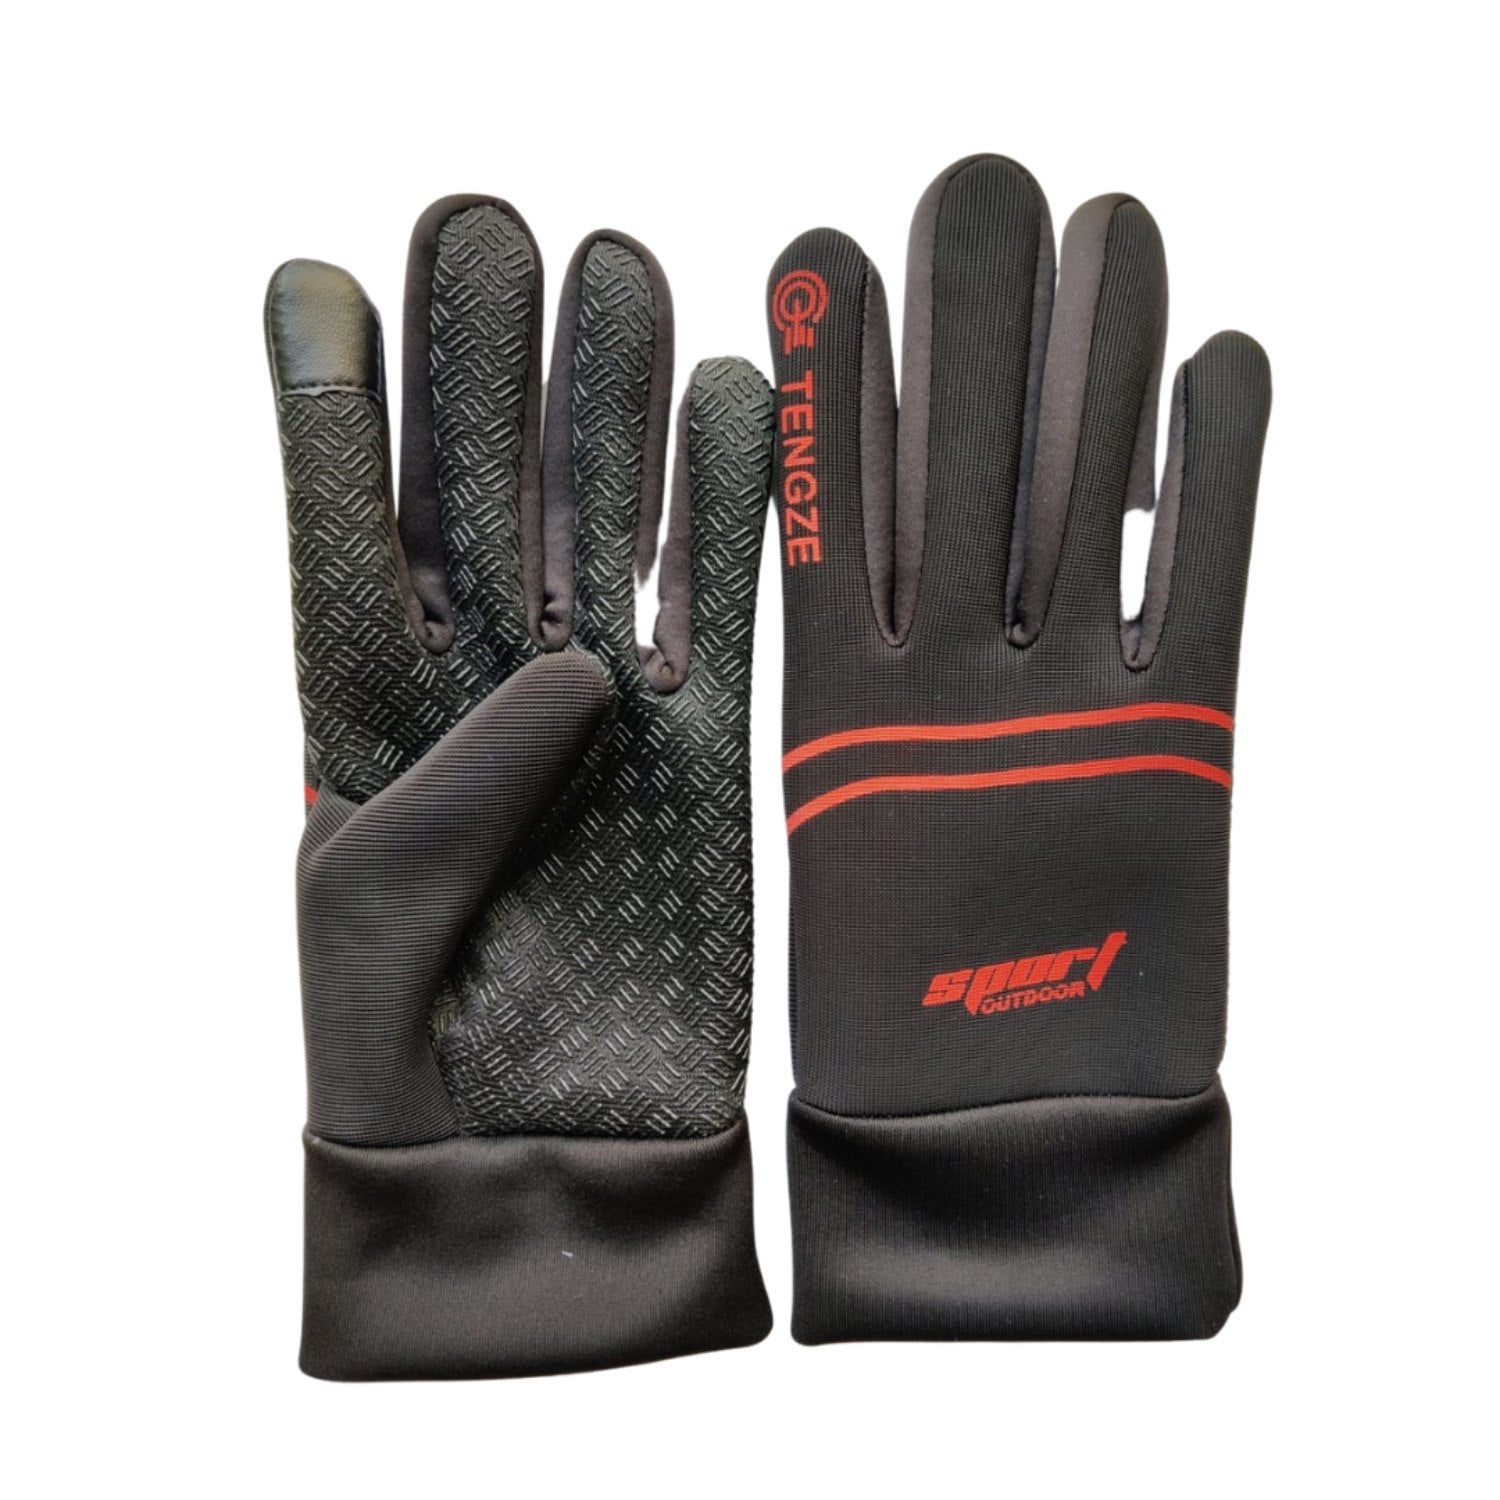 Buy Gokyo Kaza Cold Weather Windproof Gloves | Cold Weather Gloves at Gokyo Outdoor Clothing & Gear